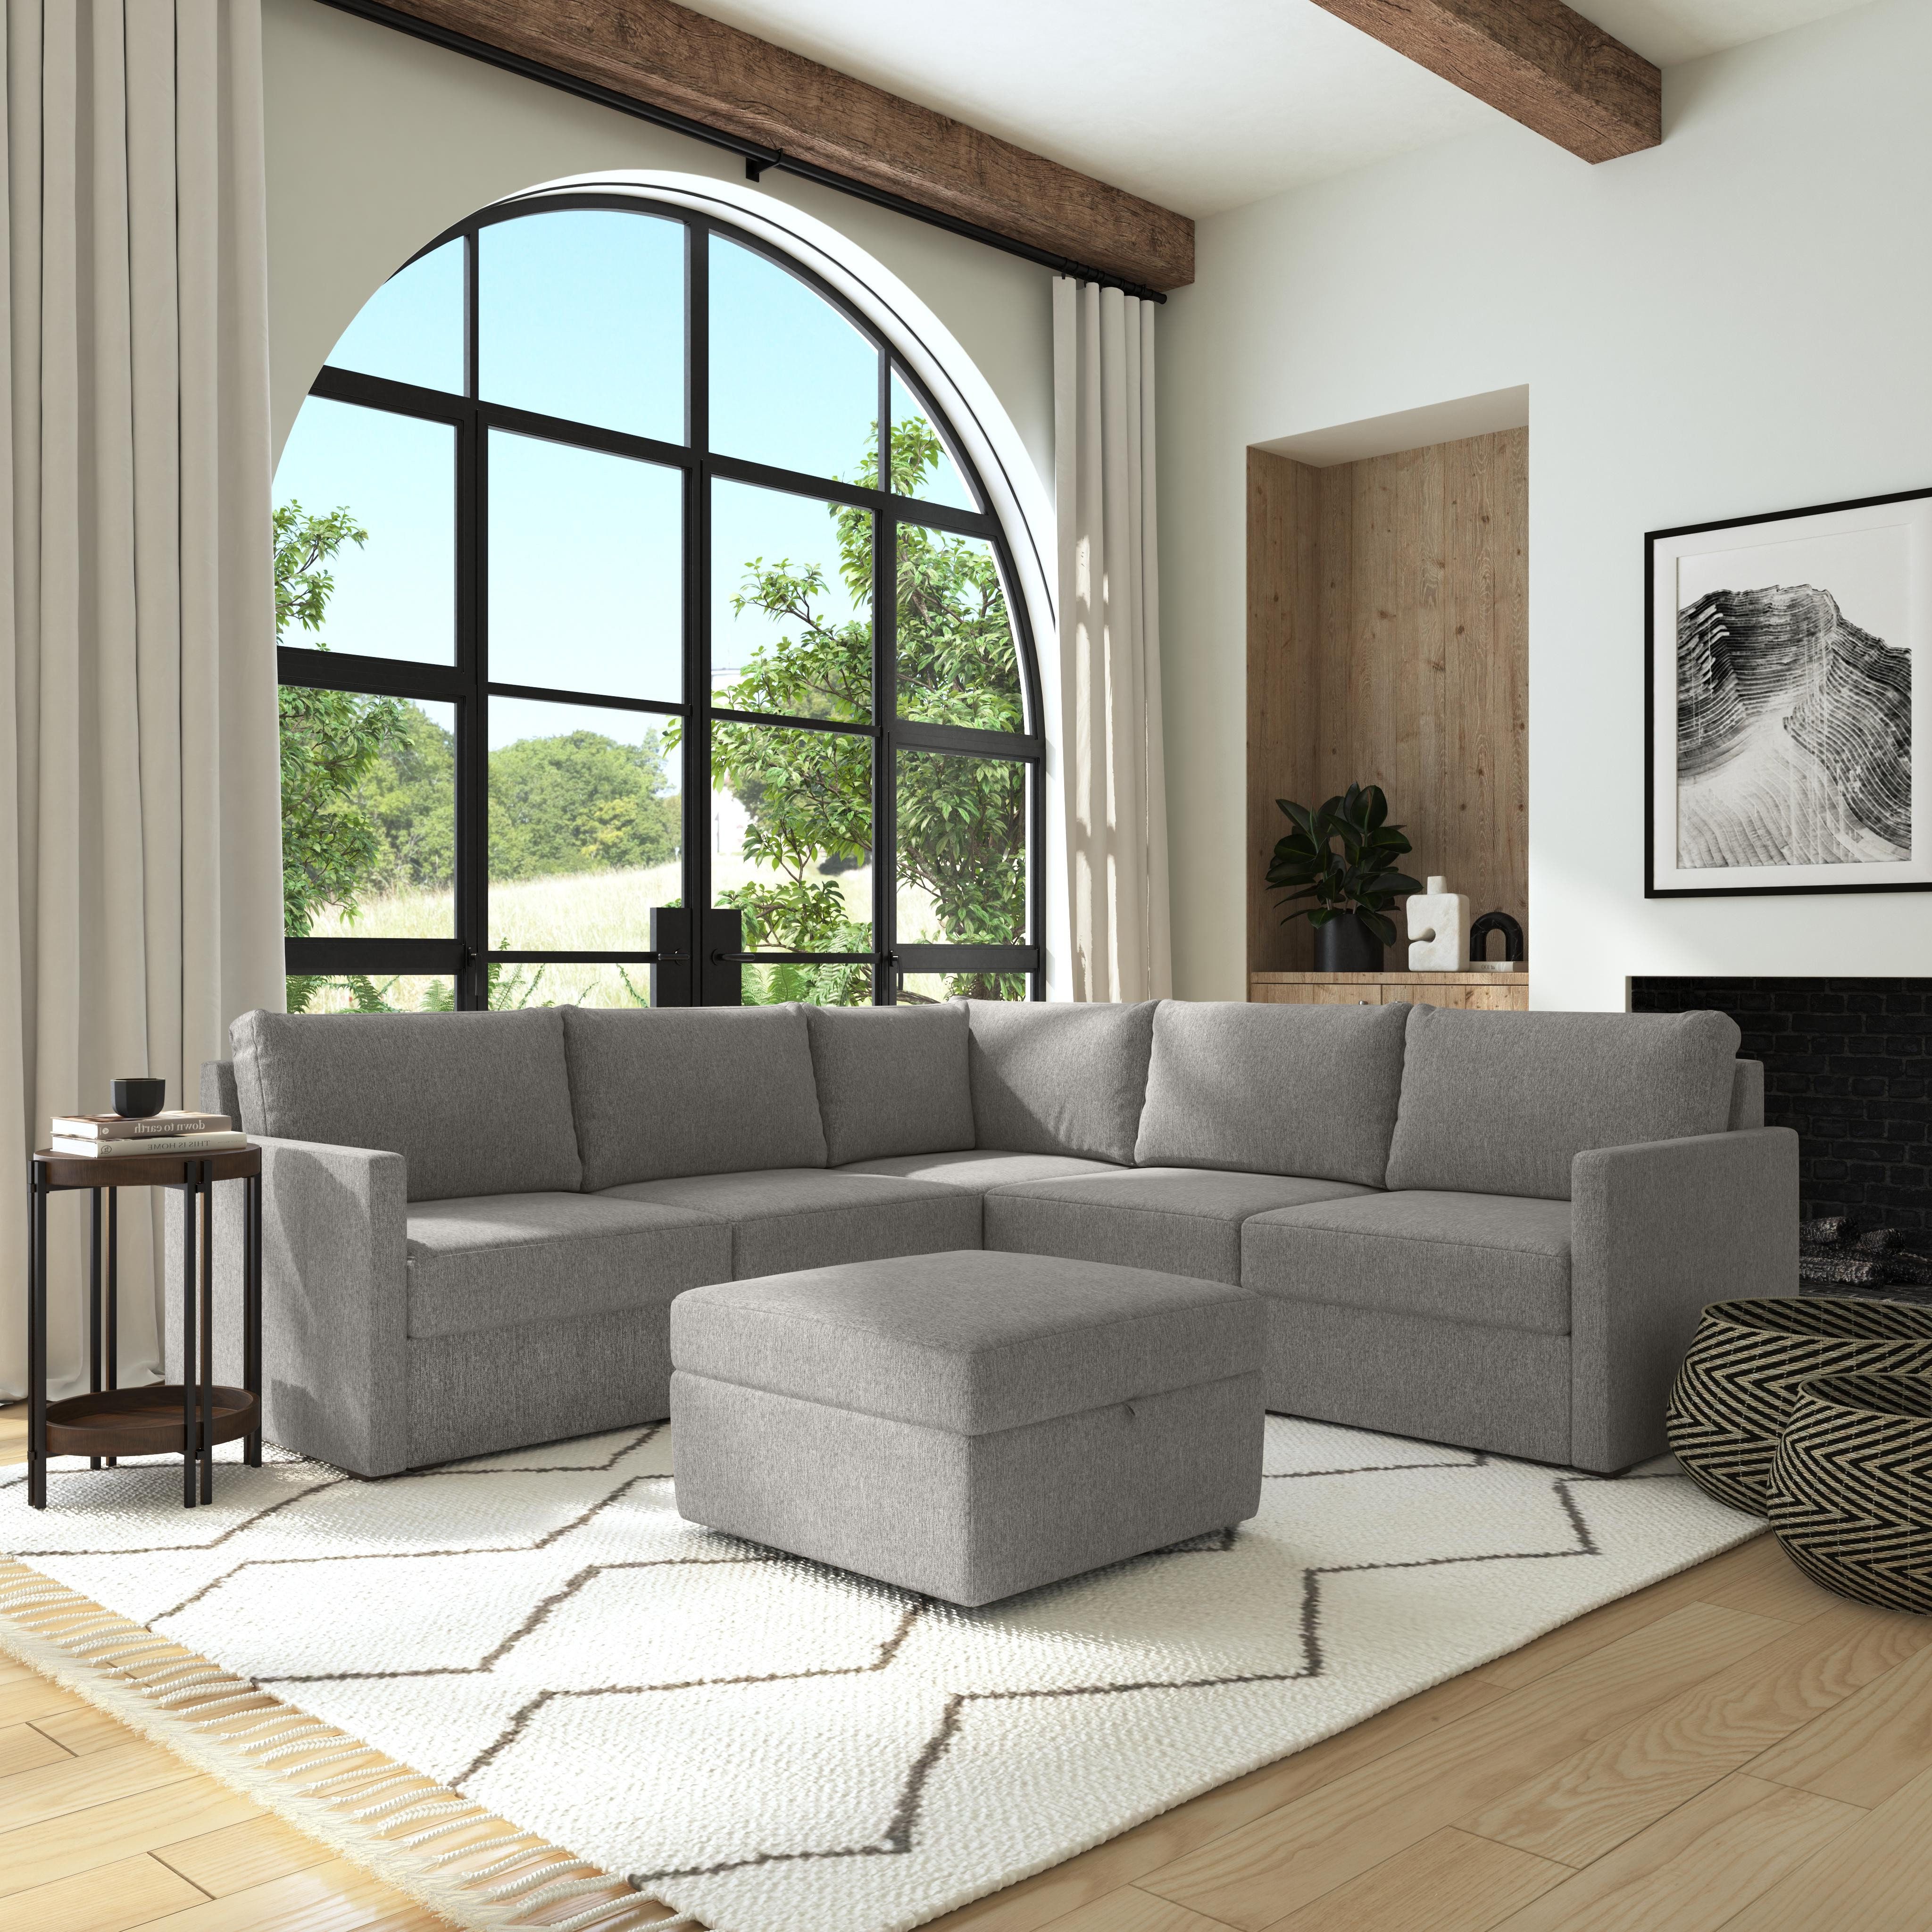 Flexsteel Flex 5 – Piece Upholstered Modular Sectional And Storage Ottoman  | Wayfair Throughout Upholstered Modular Couches With Storage (Gallery 5 of 20)